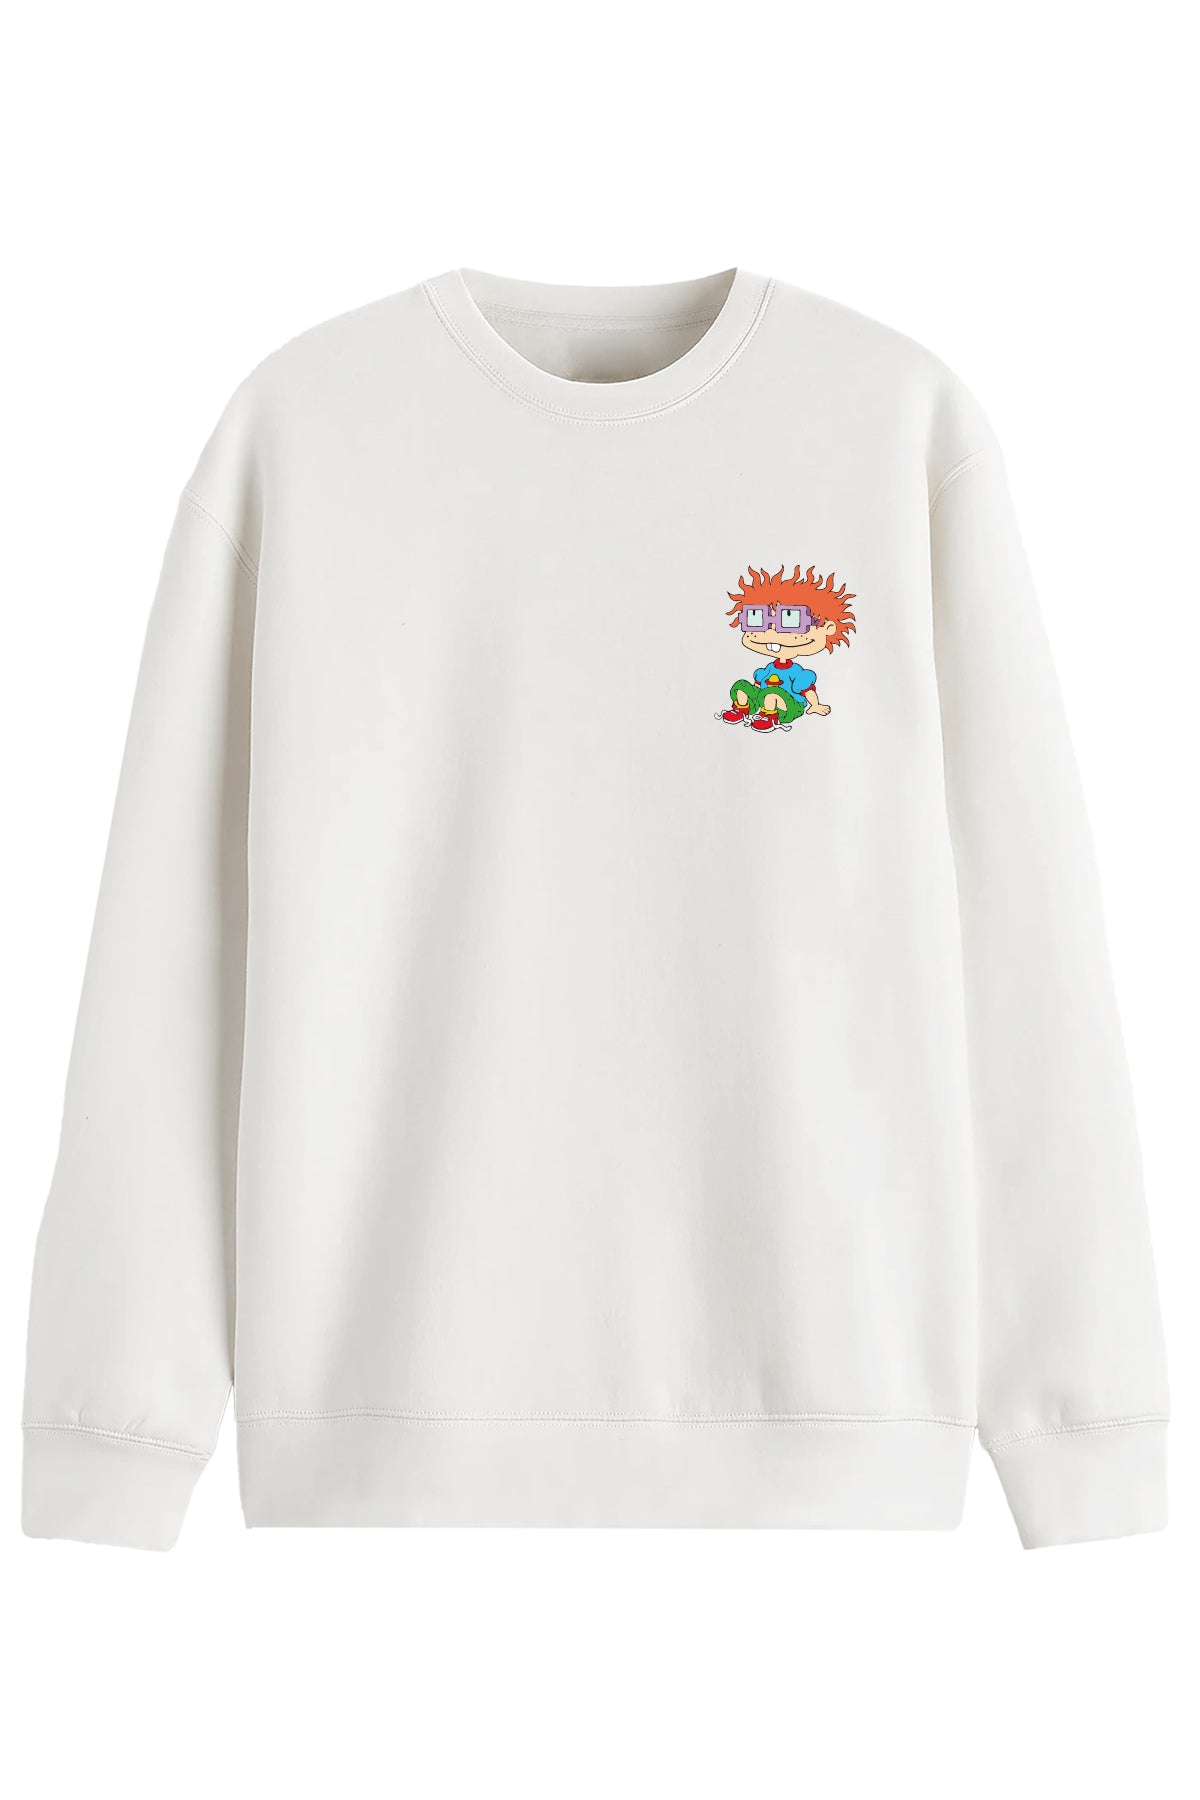 Chuckie Finster - Sweatshirt